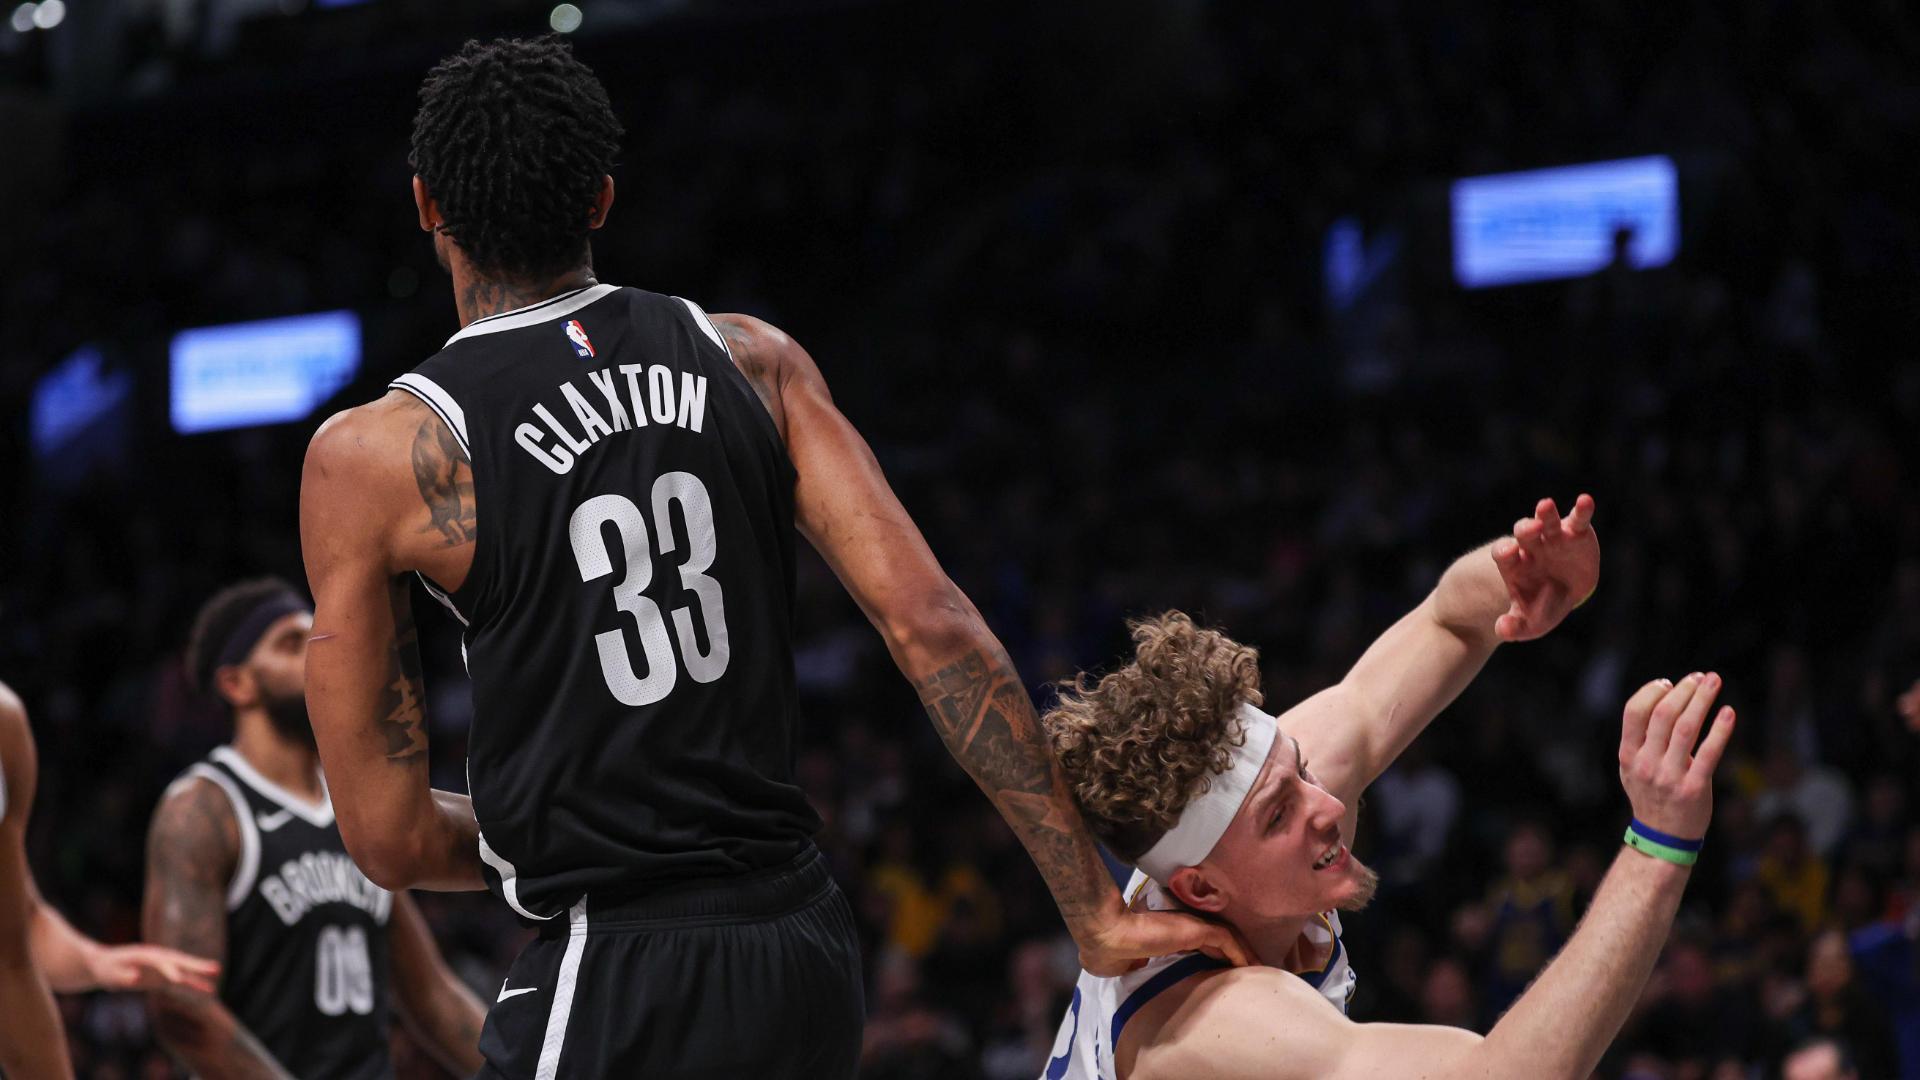 Nicolas Claxton with the emphatic jam | NBA.com